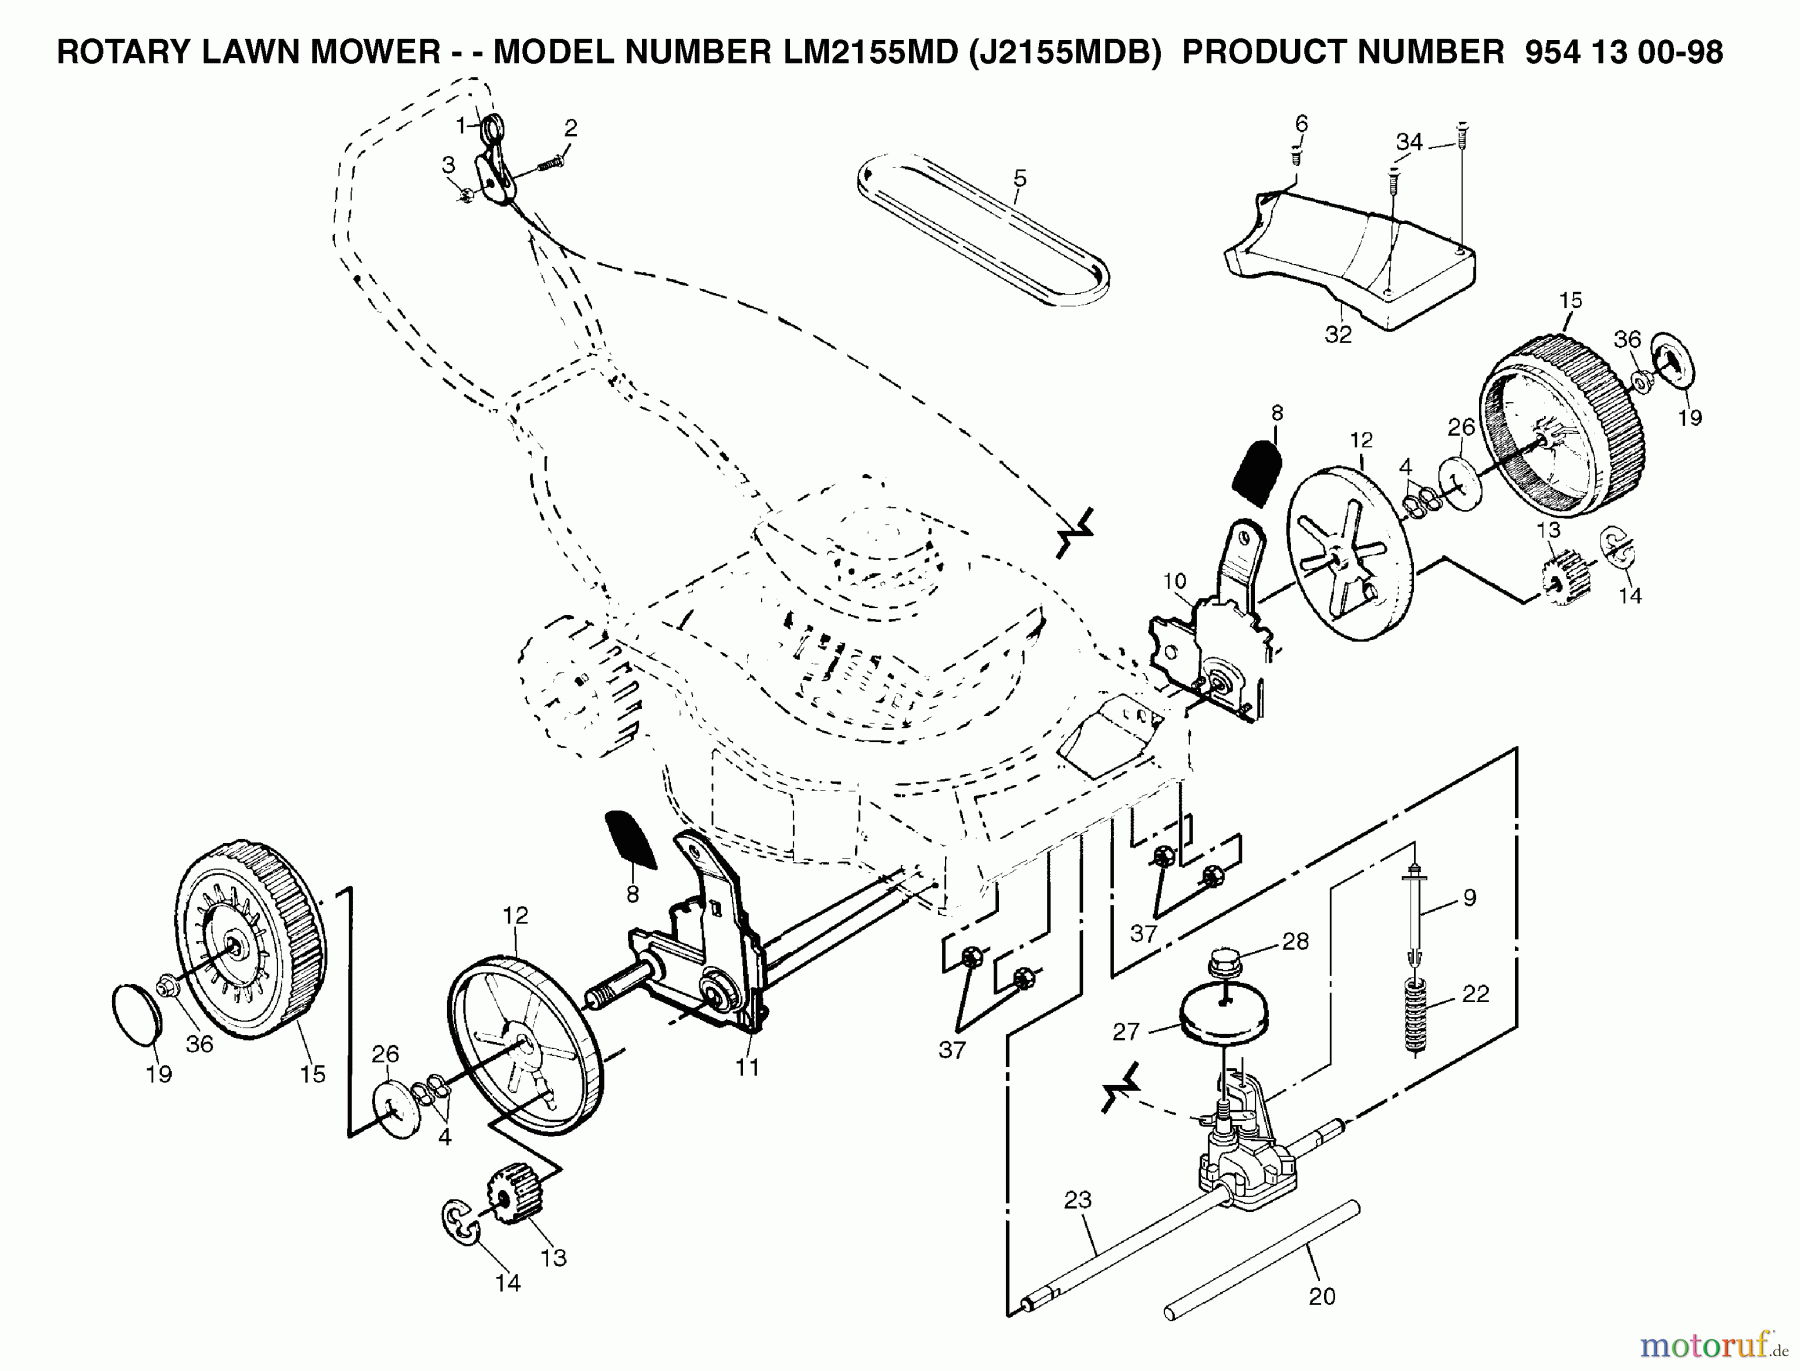  Jonsered Rasenmäher LM2155MD (J2155MDB, 954130098) - Jonsered Walk-Behind Mower (2003-05) PRODUCT COMPLETE #1